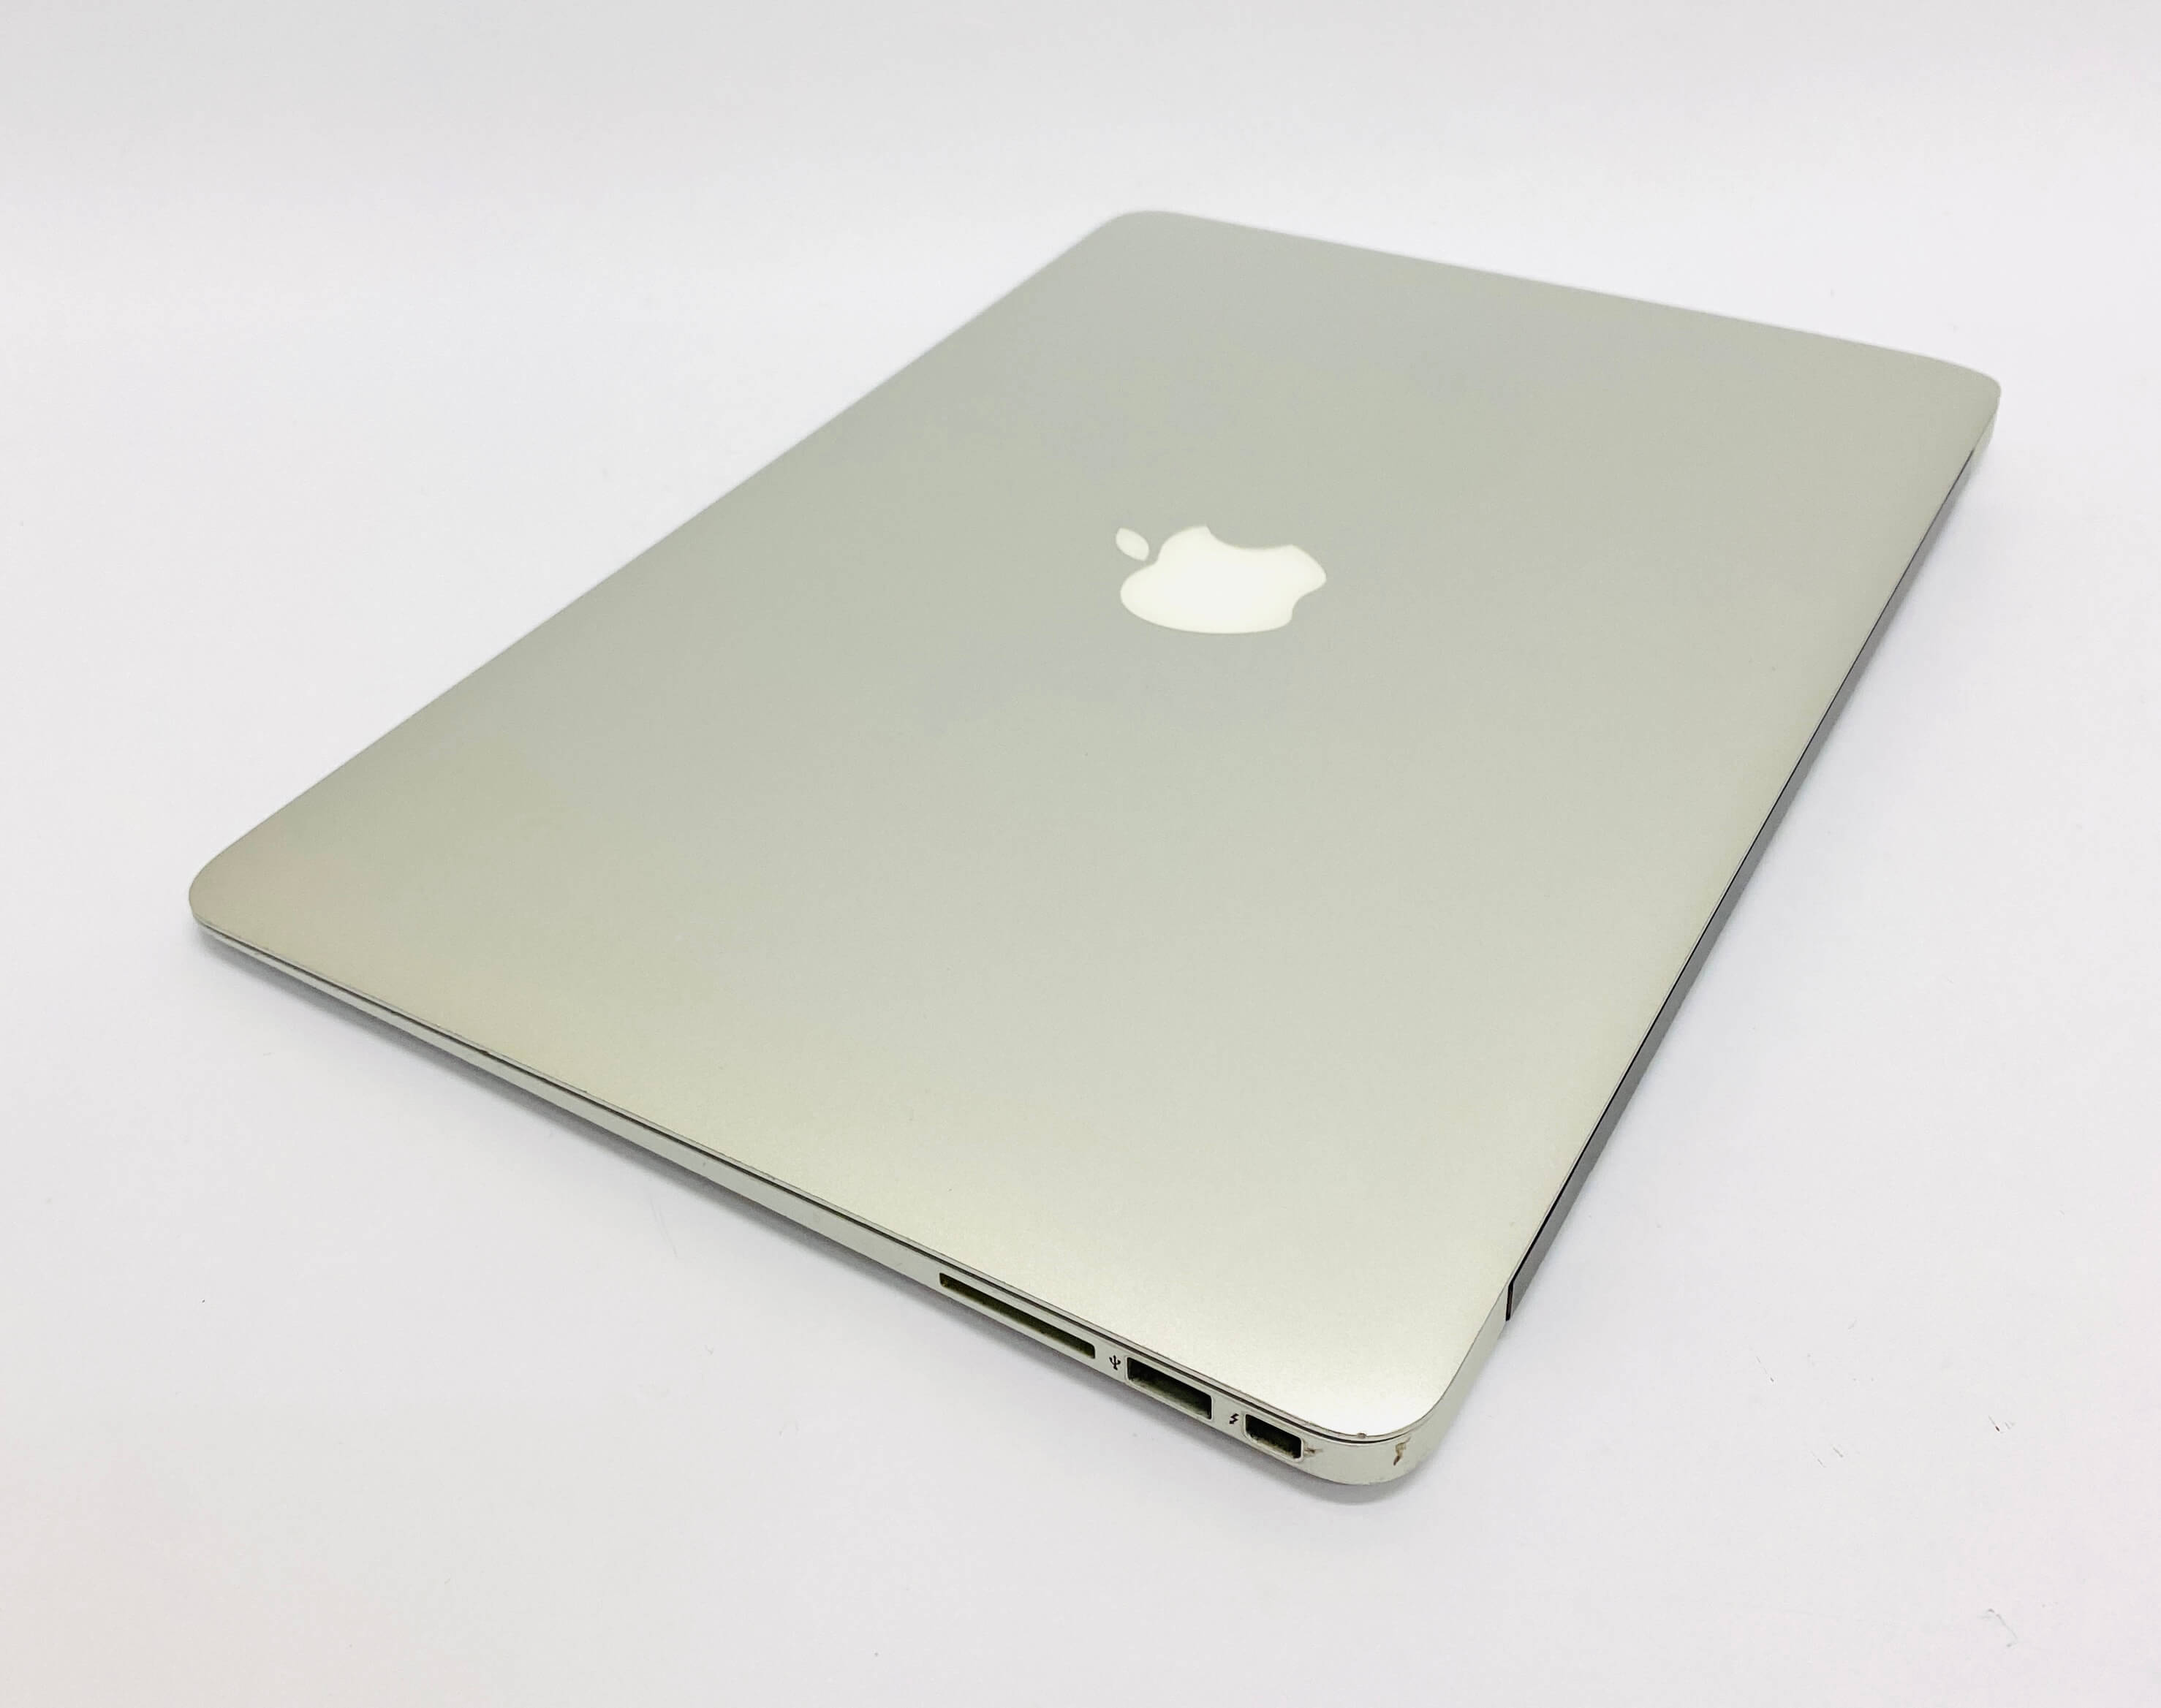 MacBook Air 13'', i5, rok 2015, 4GB RAM, 256GB SSD